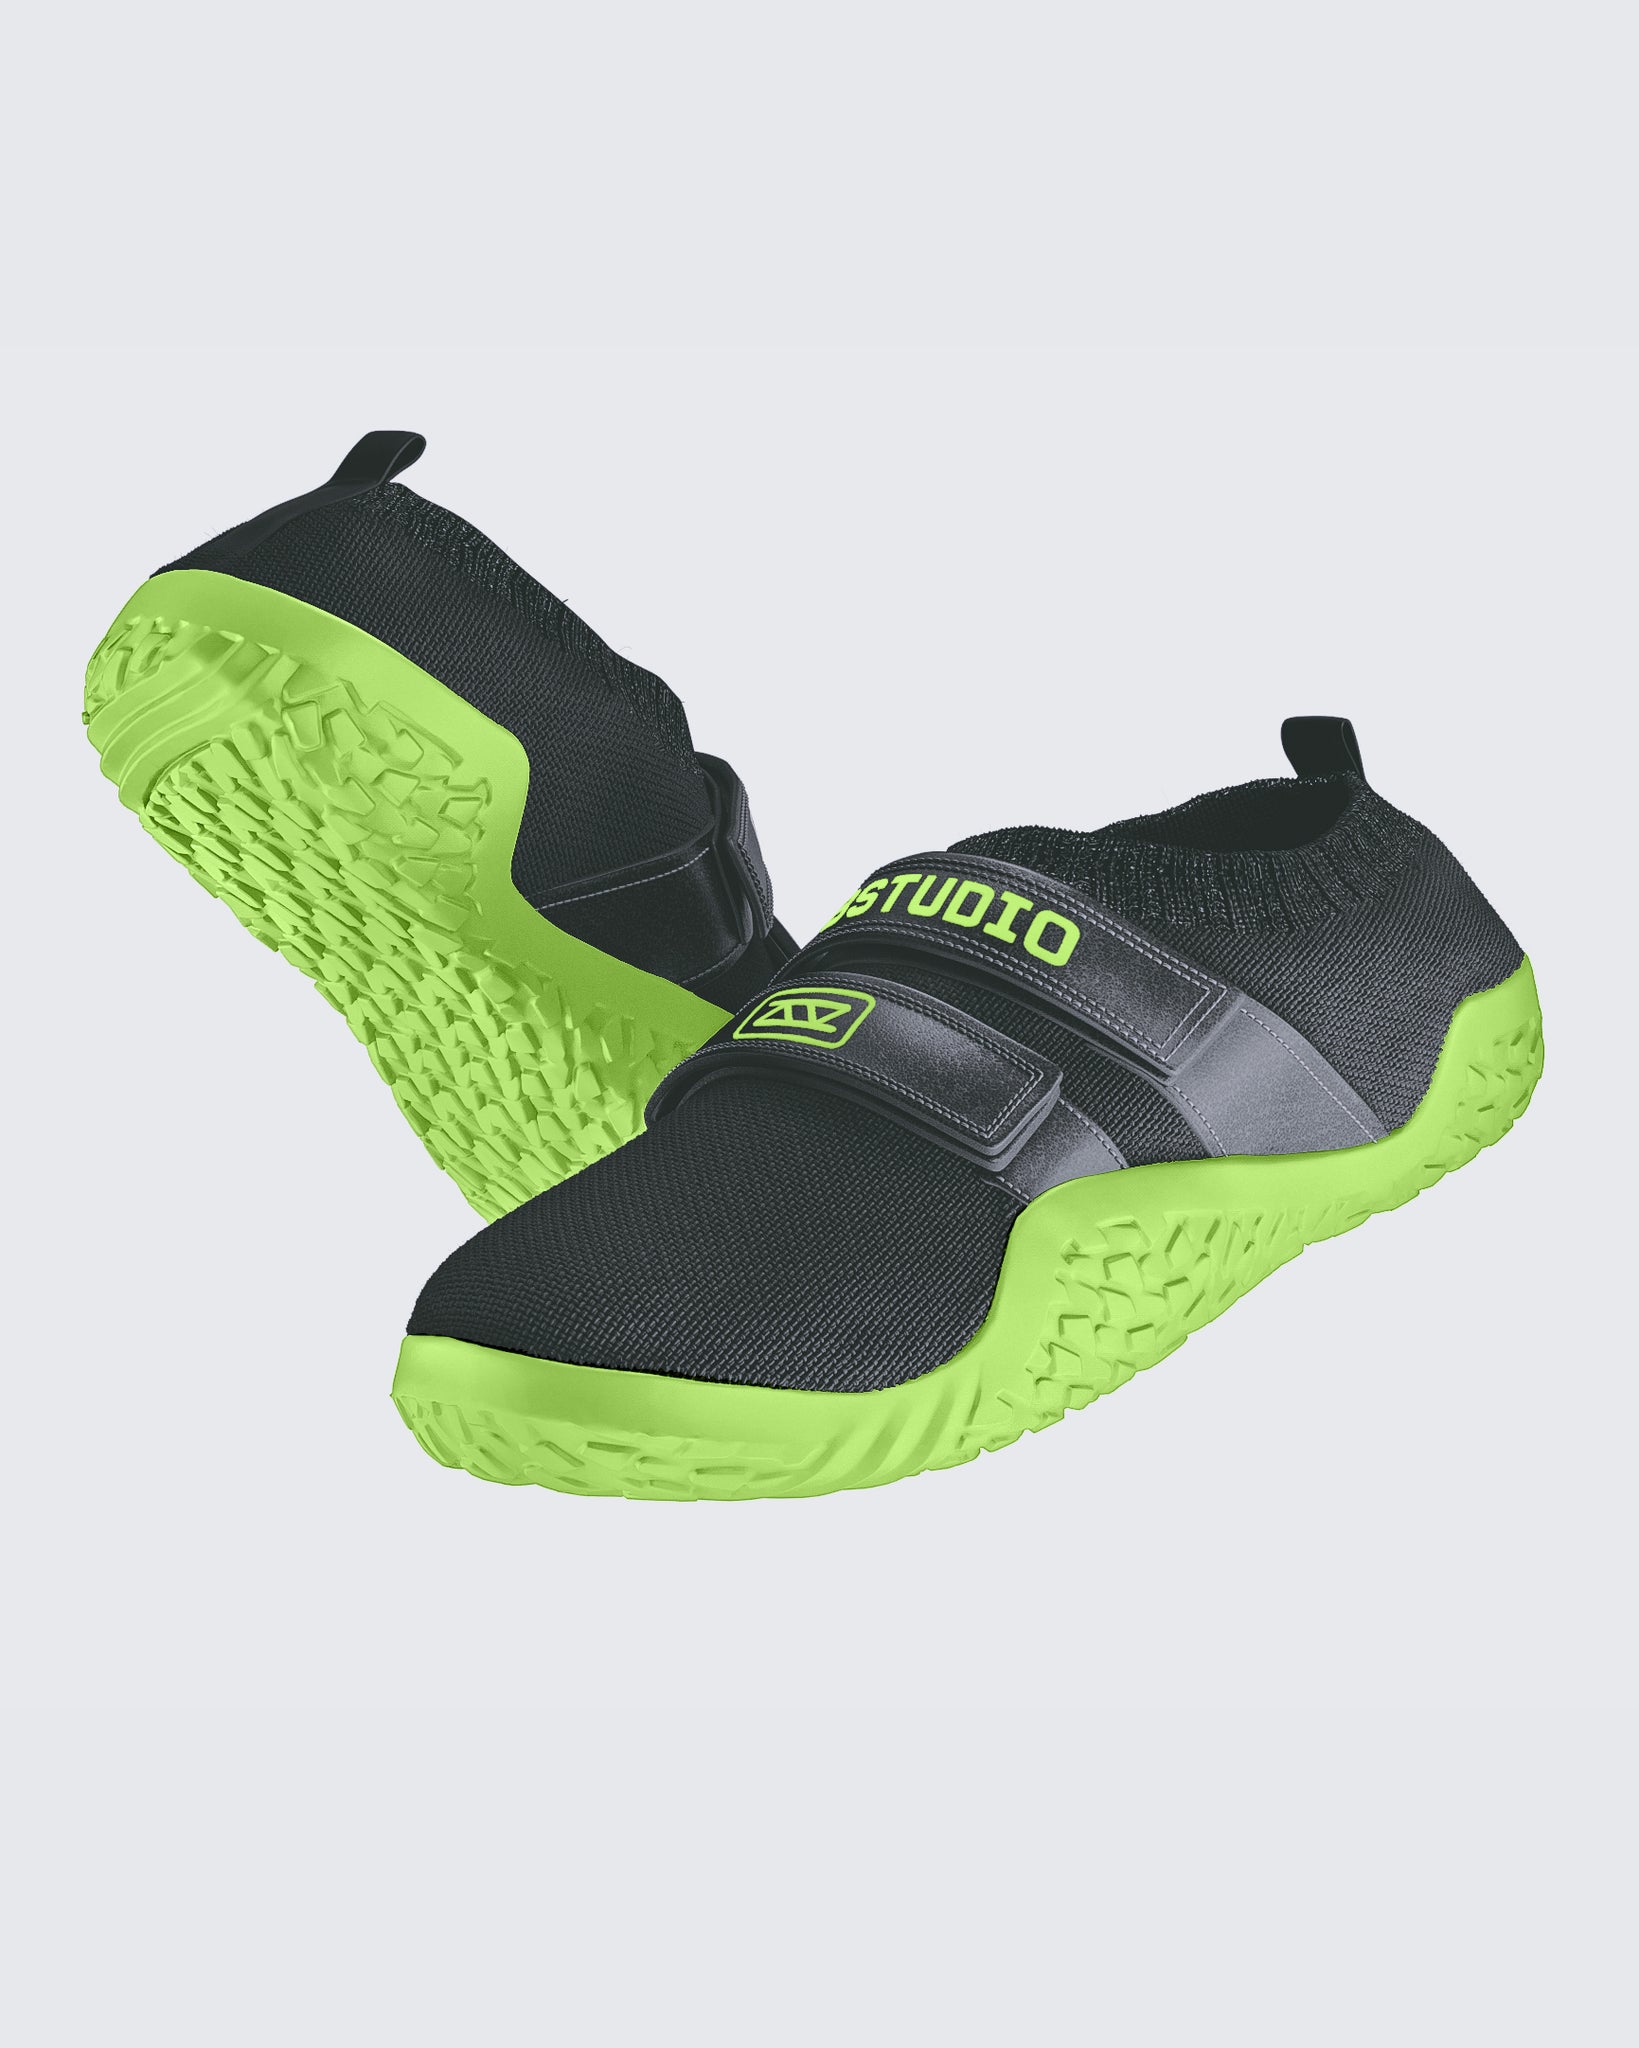 Slippers Pro - Green and Black (ErTony)